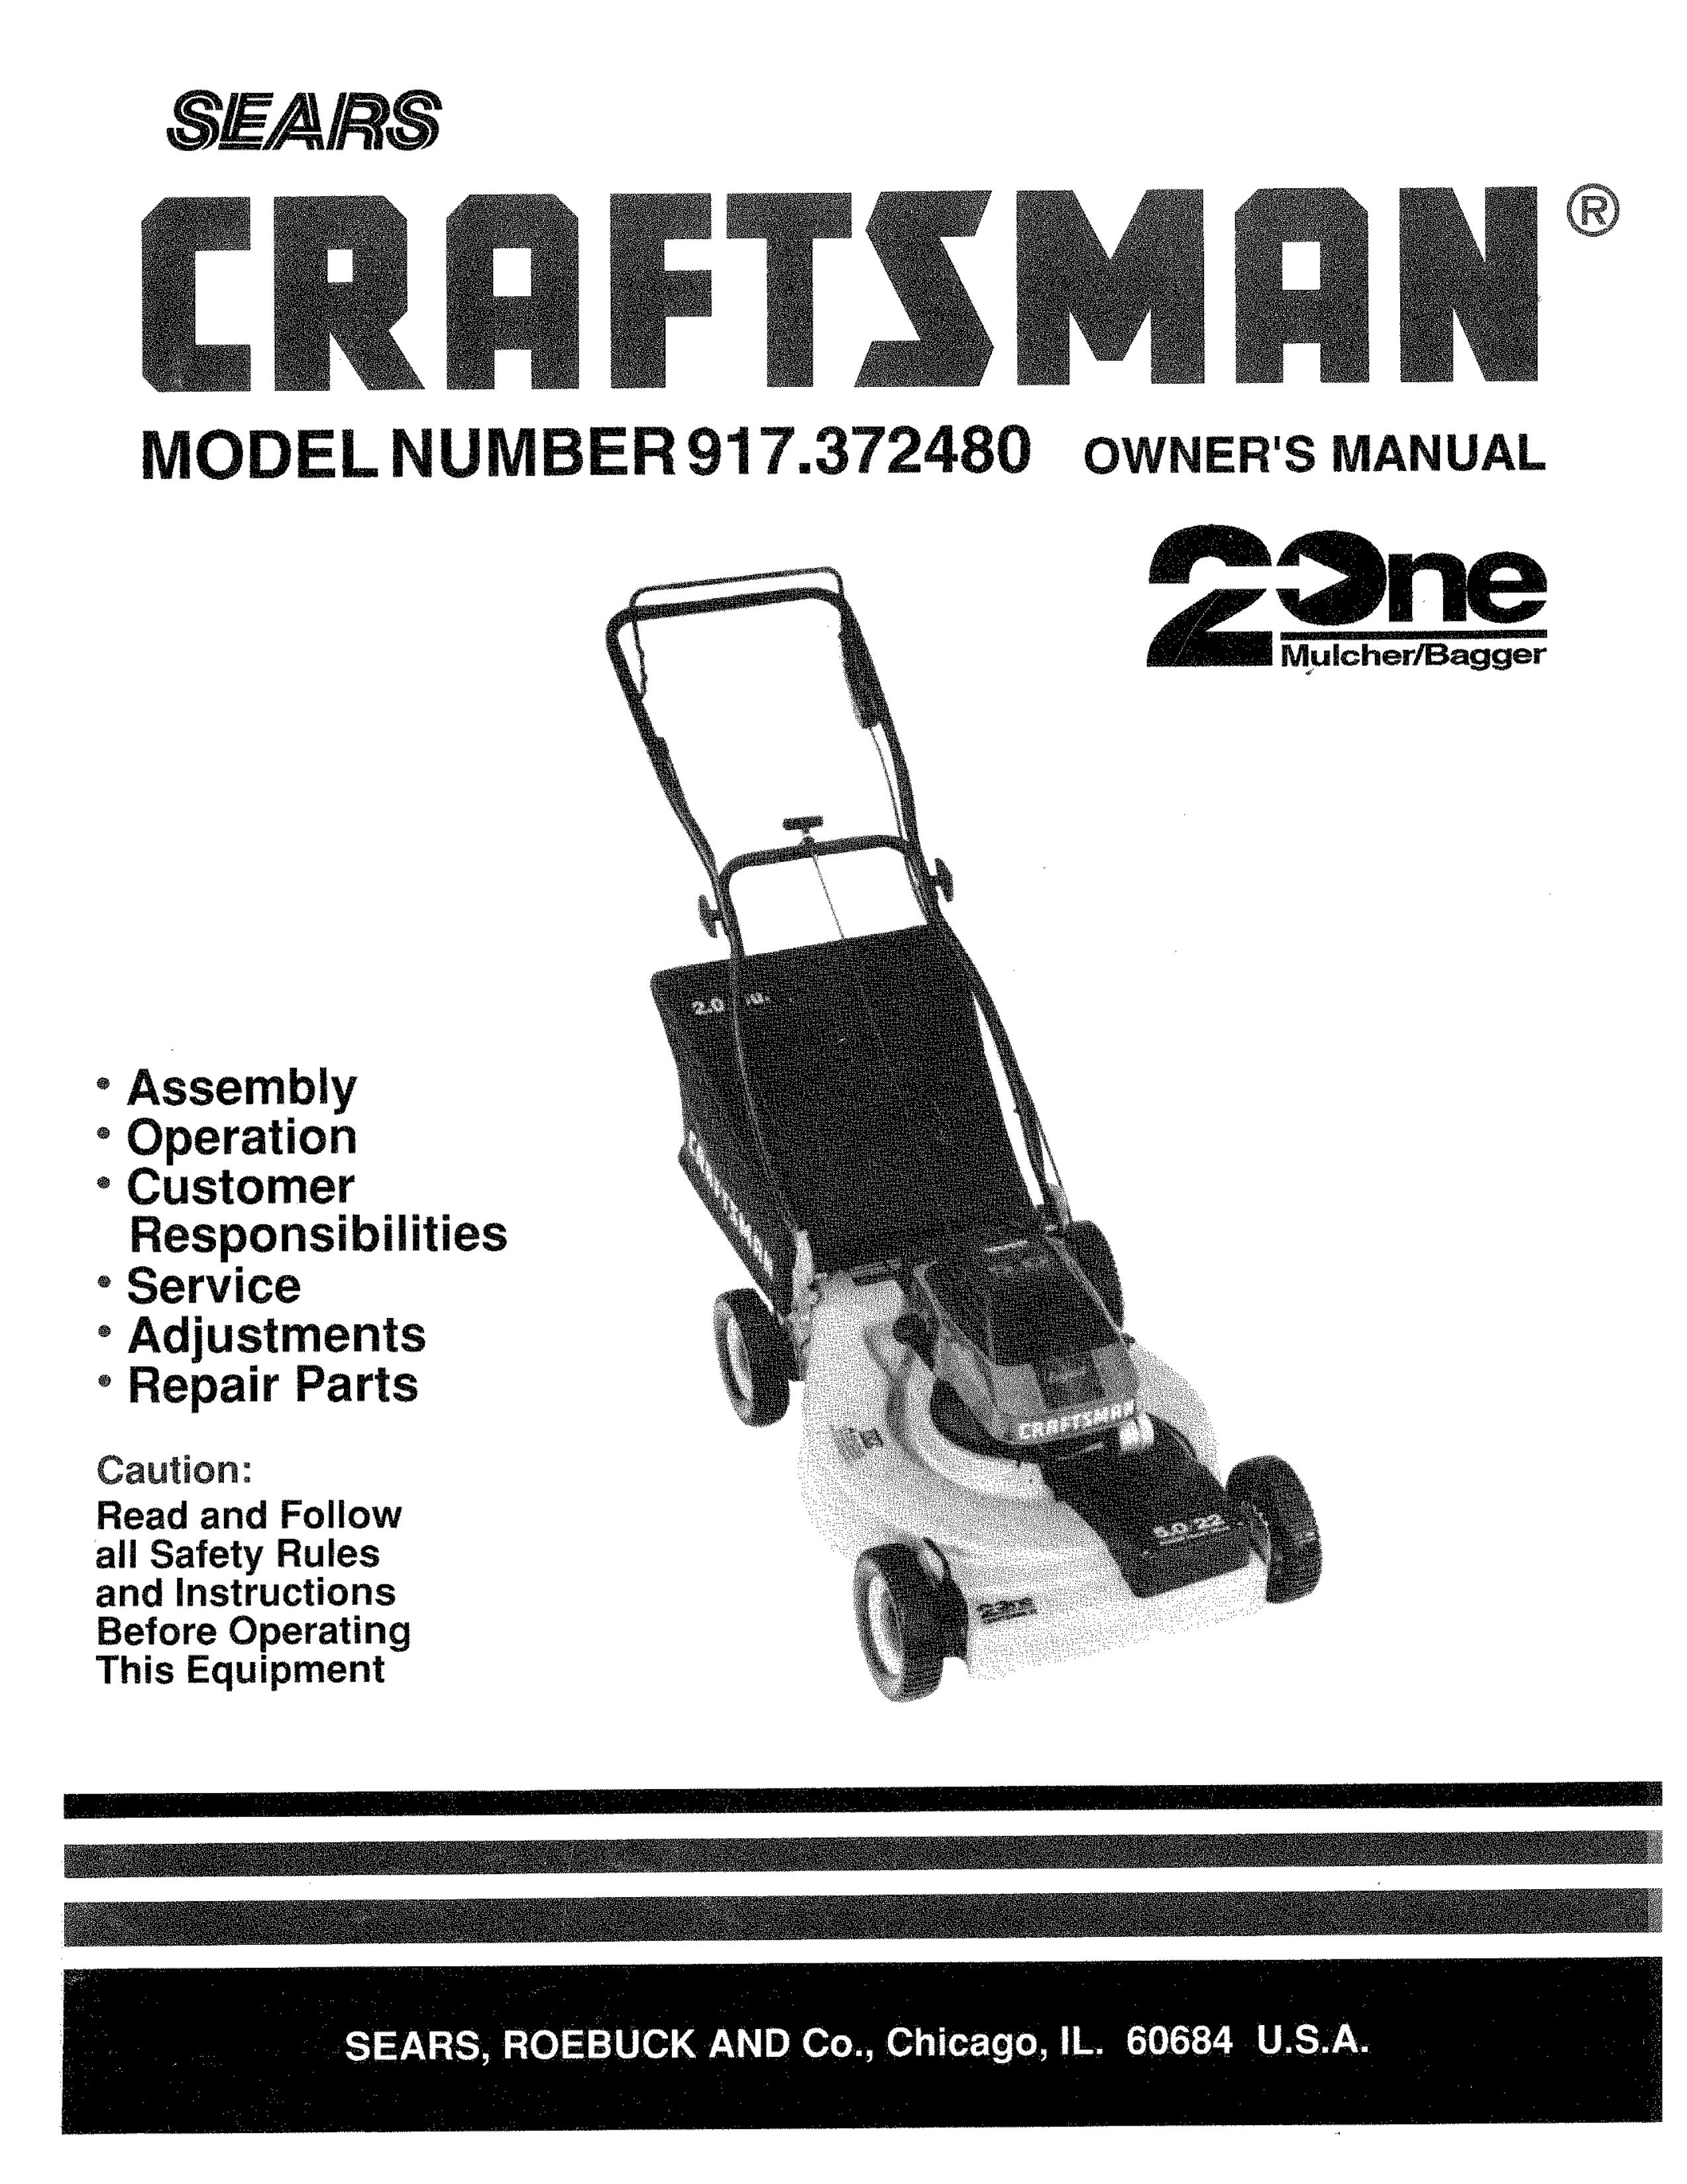 Craftsman 917.37248 Brush Cutter User Manual